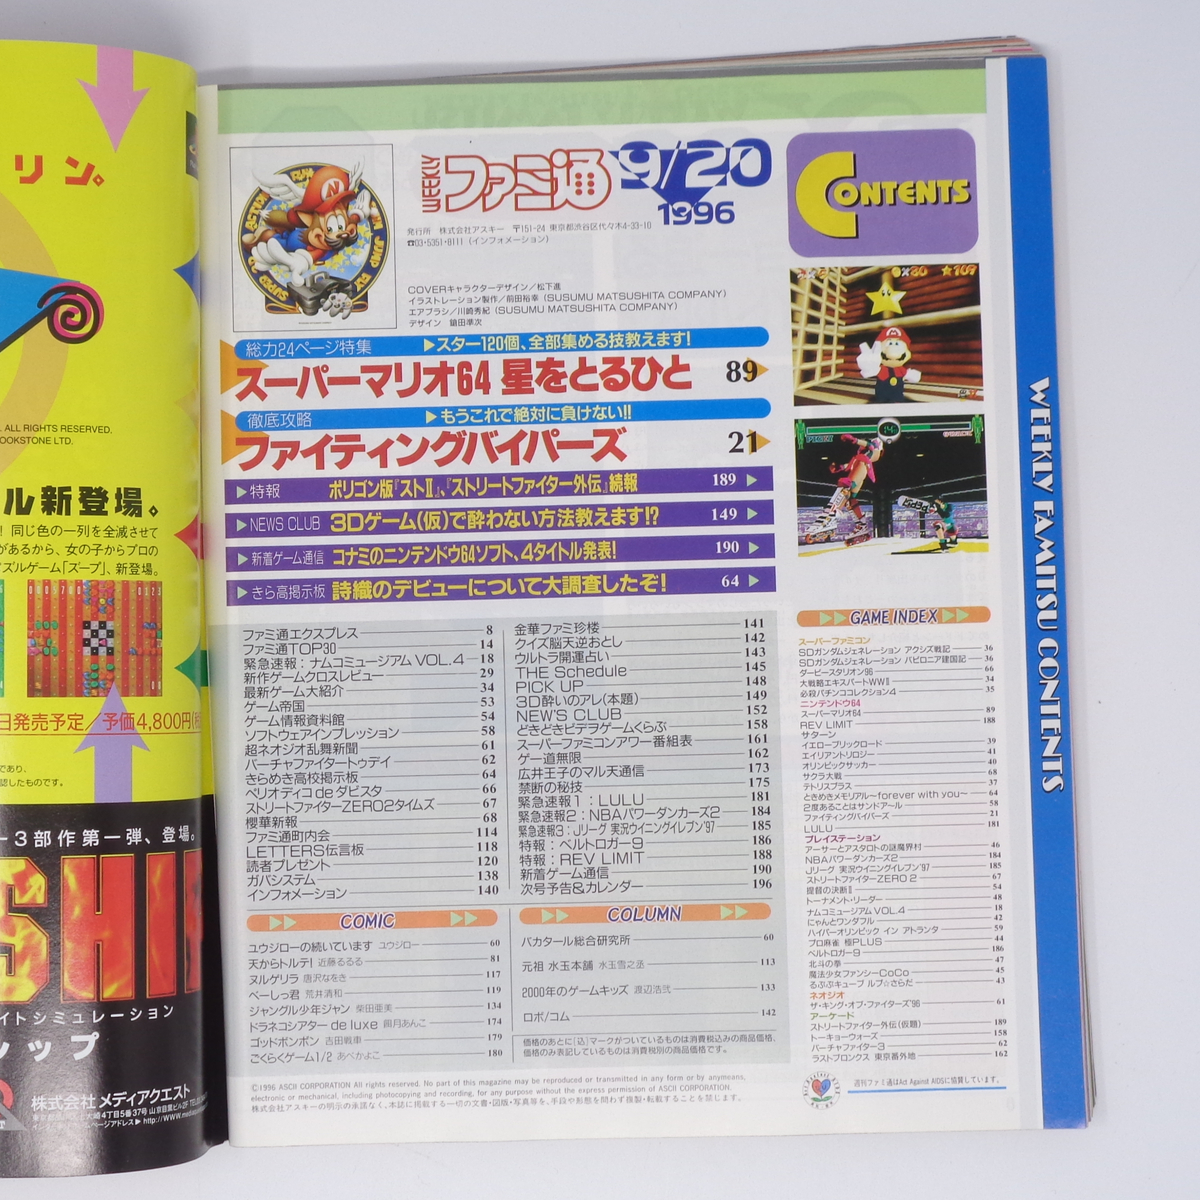 WEEKLYファミ通 1996年9月20日号No.405 /スーパーマリオ64/ファイティングバイパーズ/ゲーム雑誌[Free Shipping]